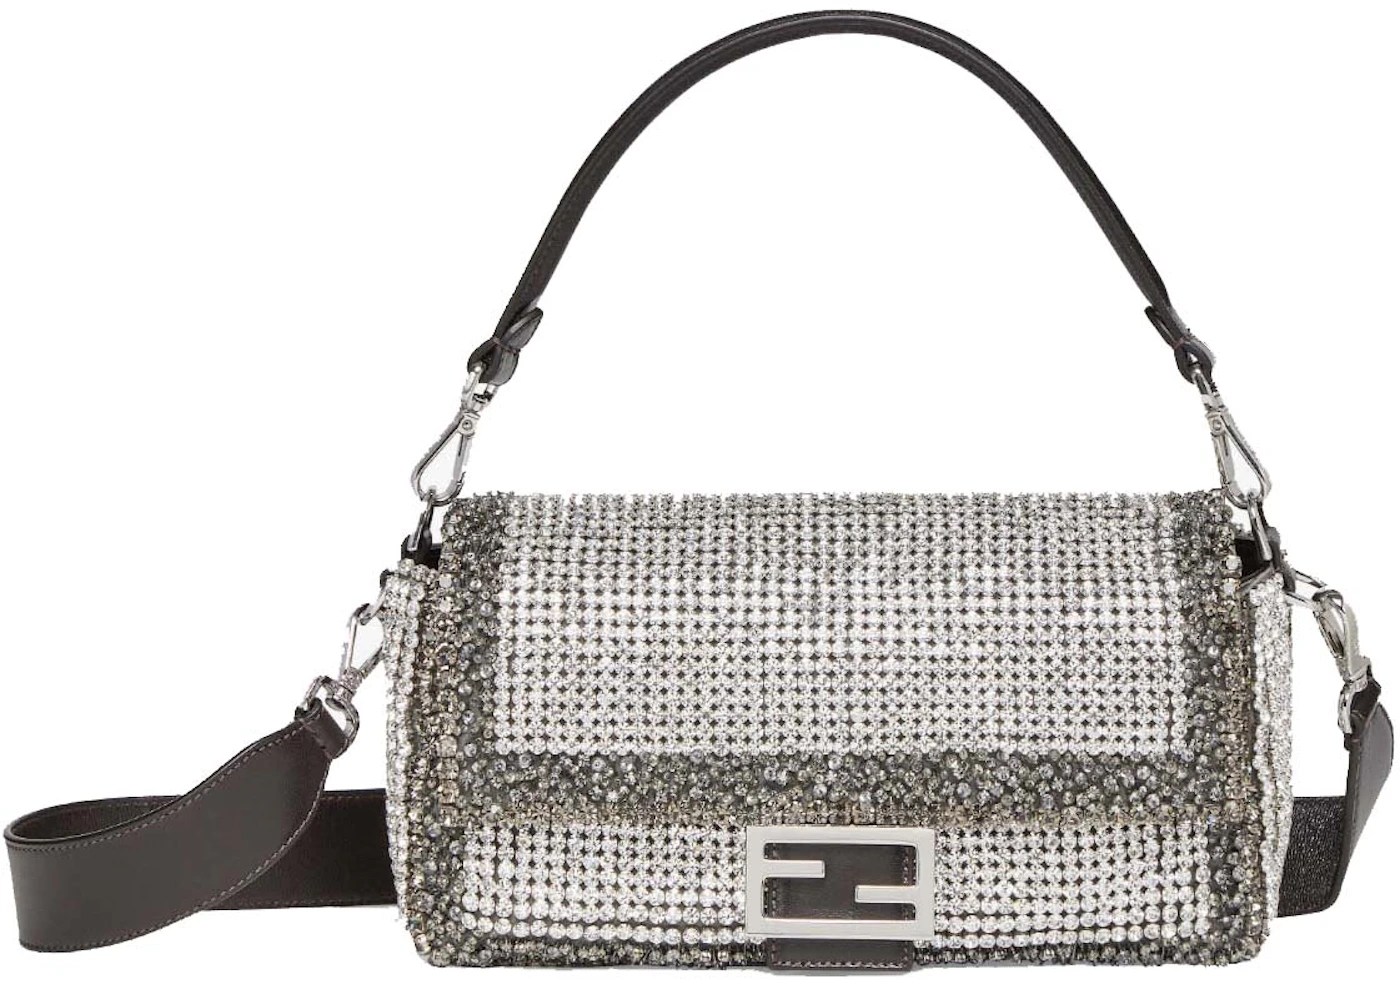 Fendi X Versace Fendace Gradient Crystal Baguette Shoulder Bag at